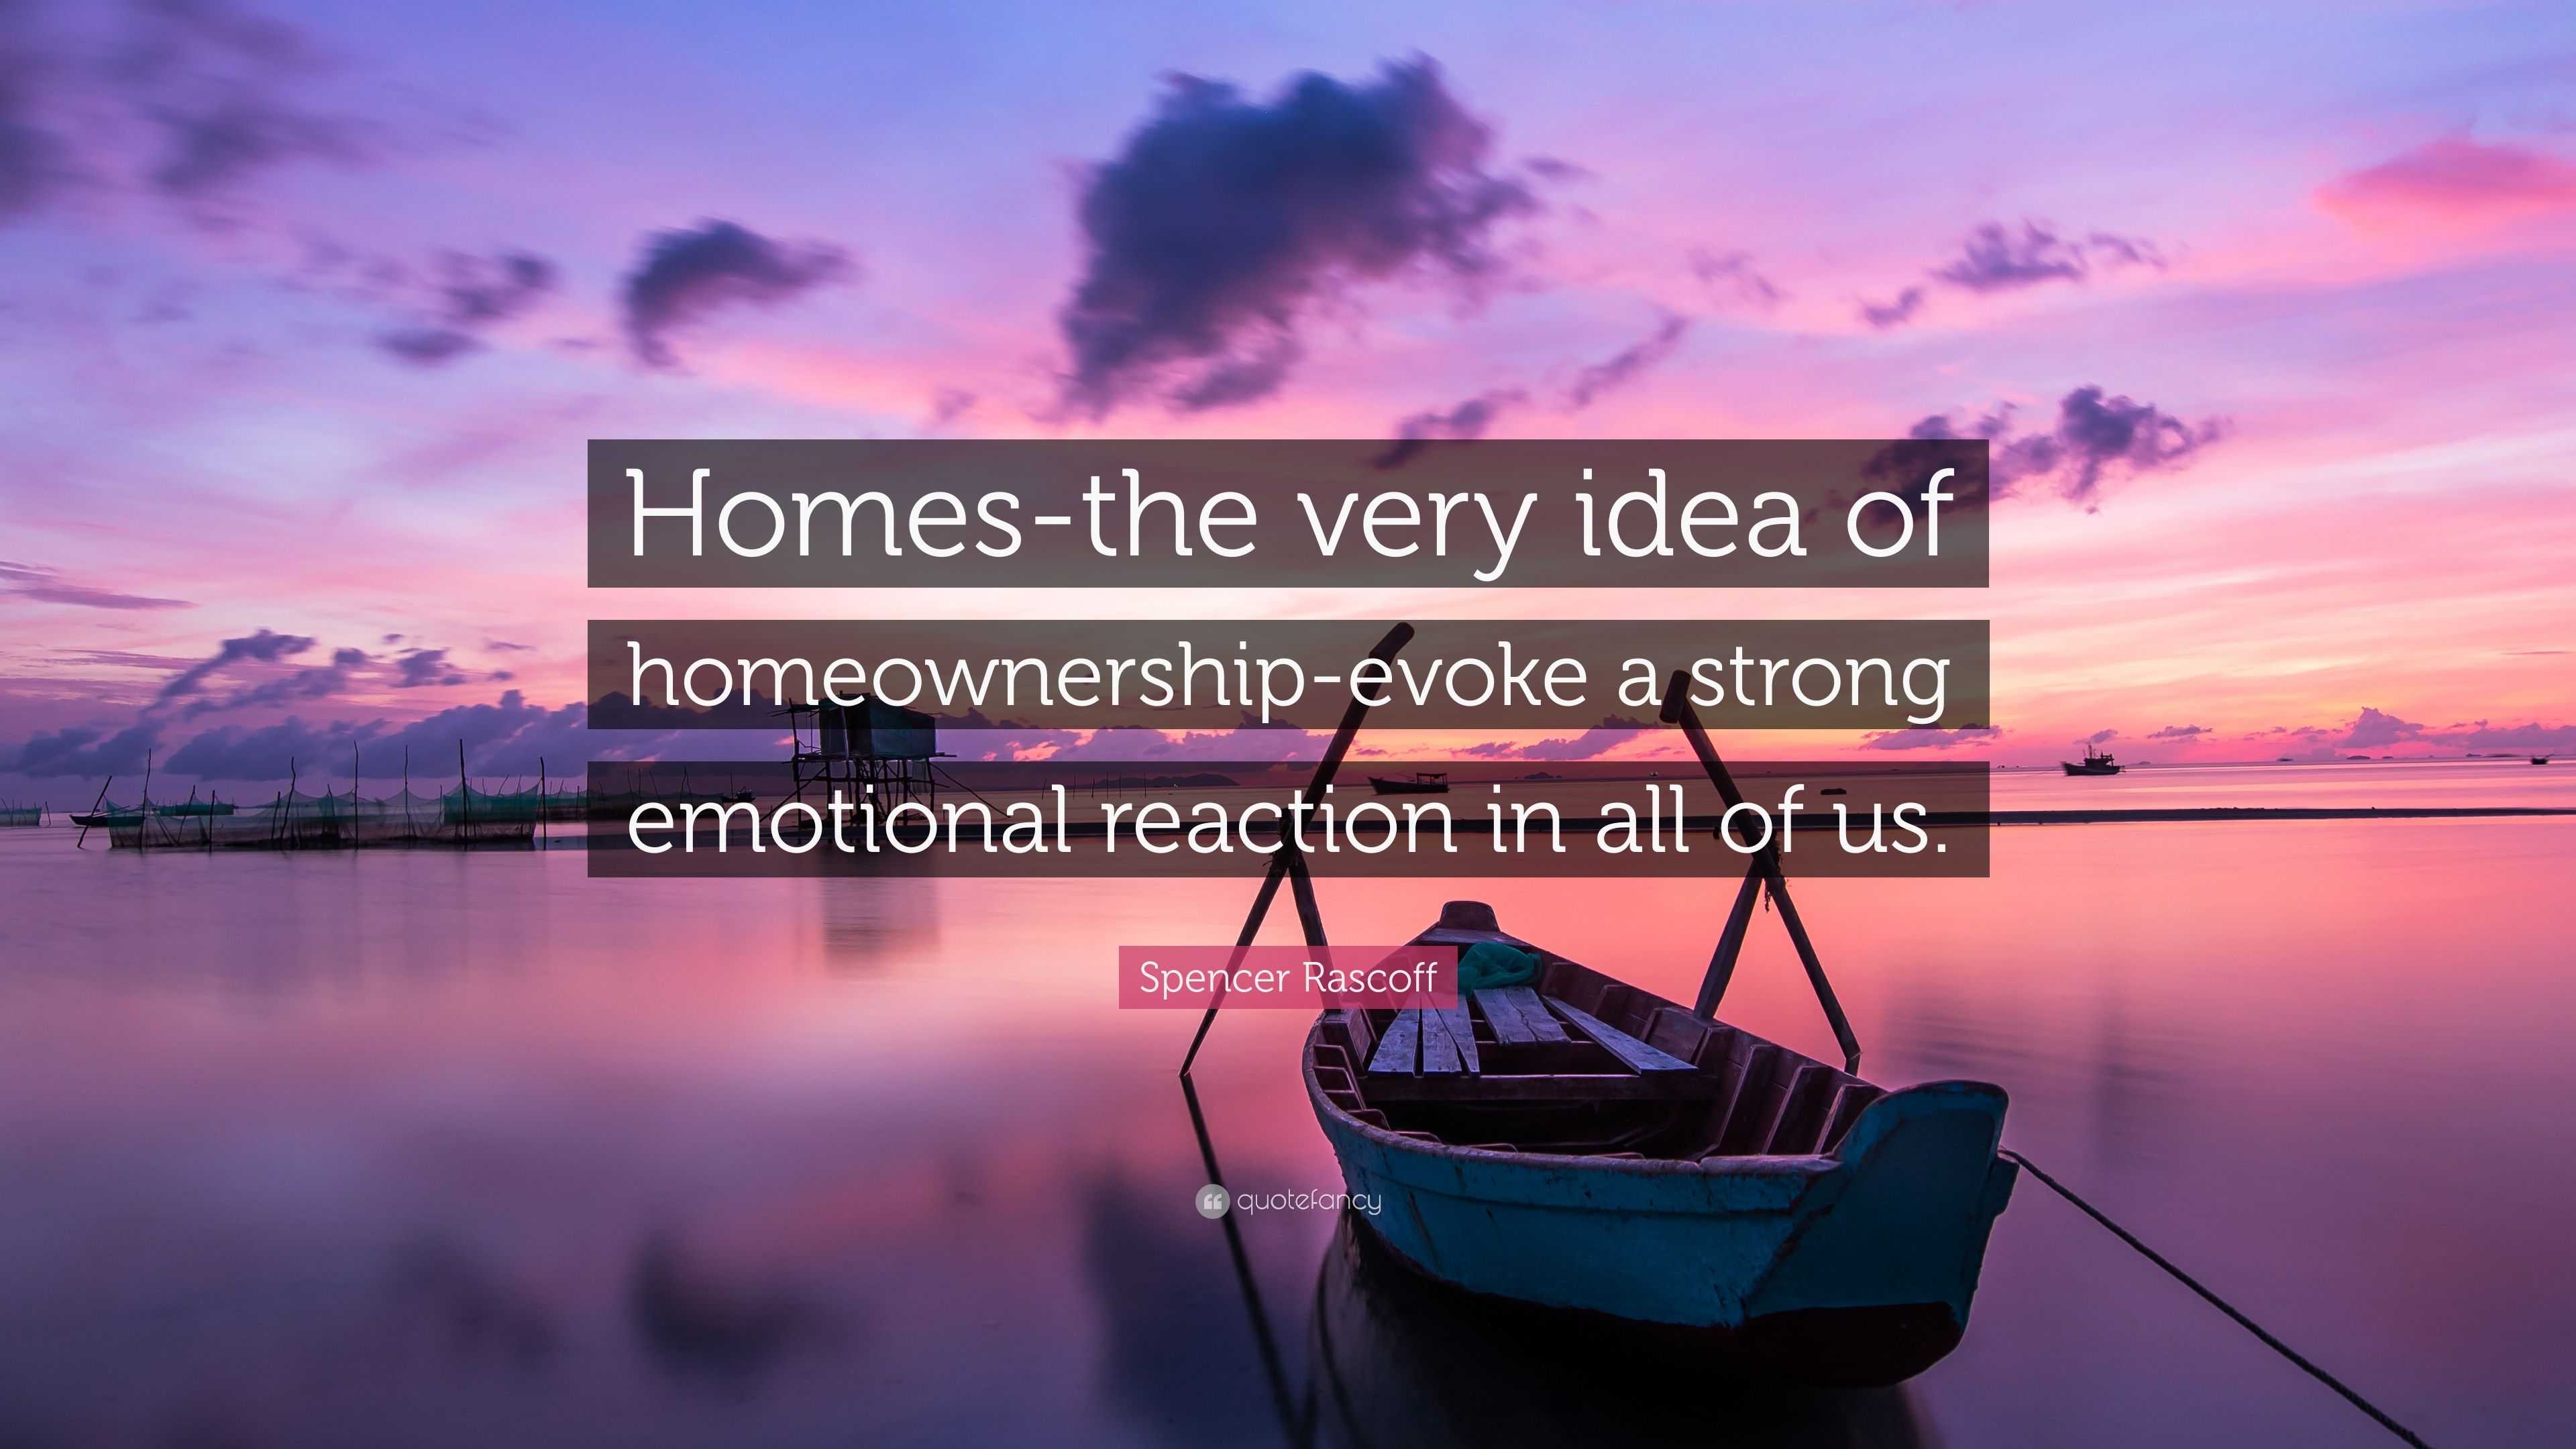 Spencer Rascoff Quote: “Homes-the very idea of homeownership-evoke a ...
